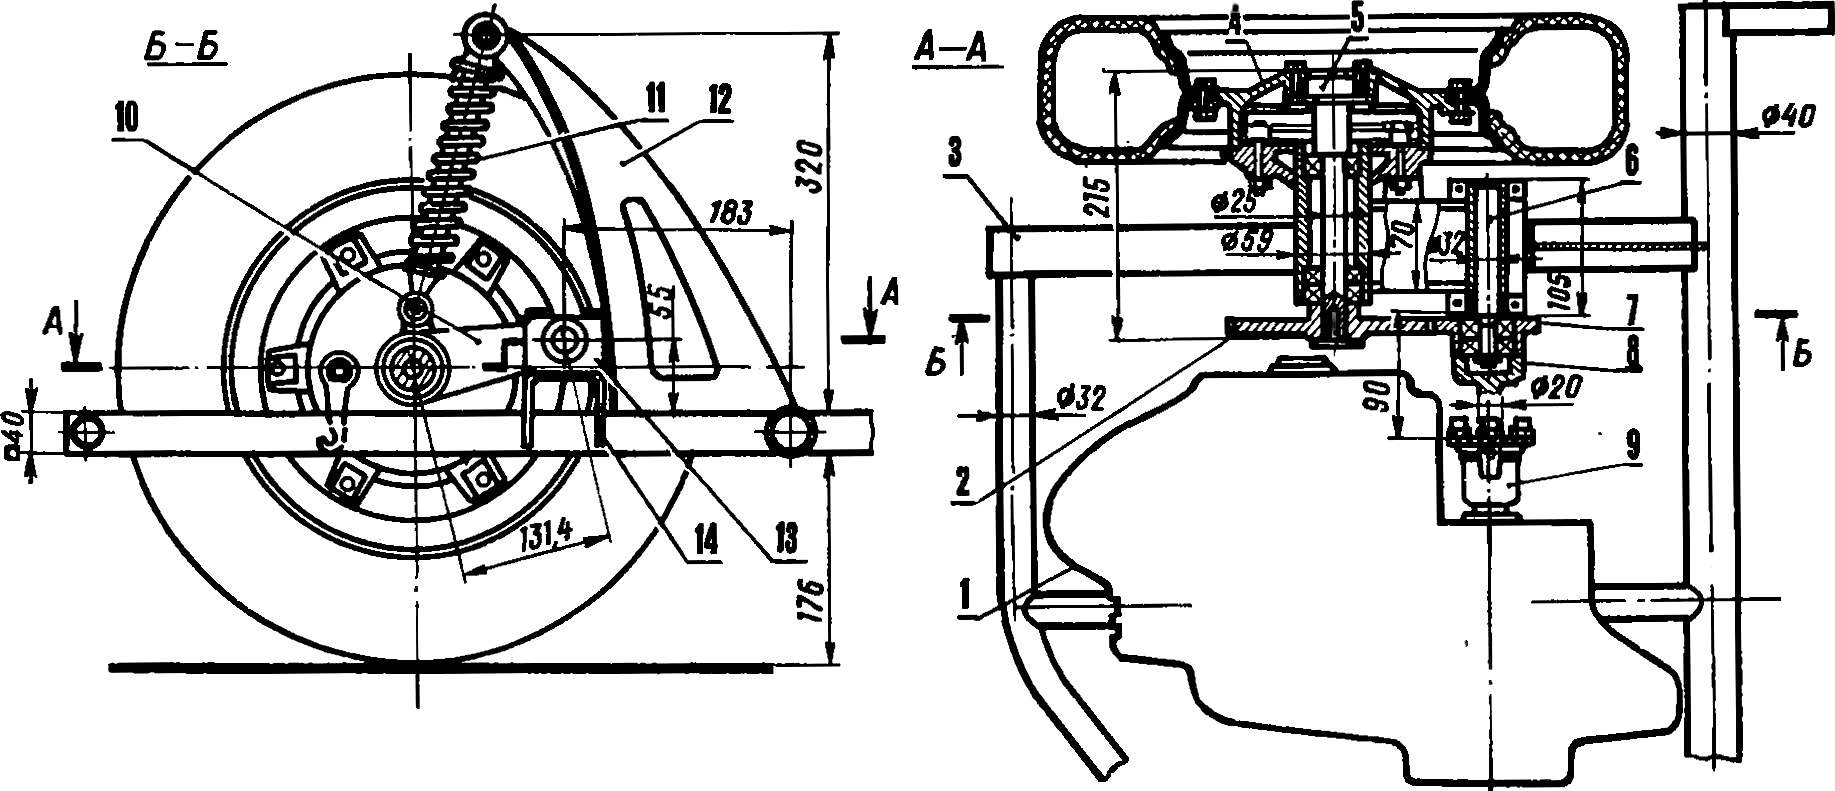 Fig. 2. The power unit motomobile 